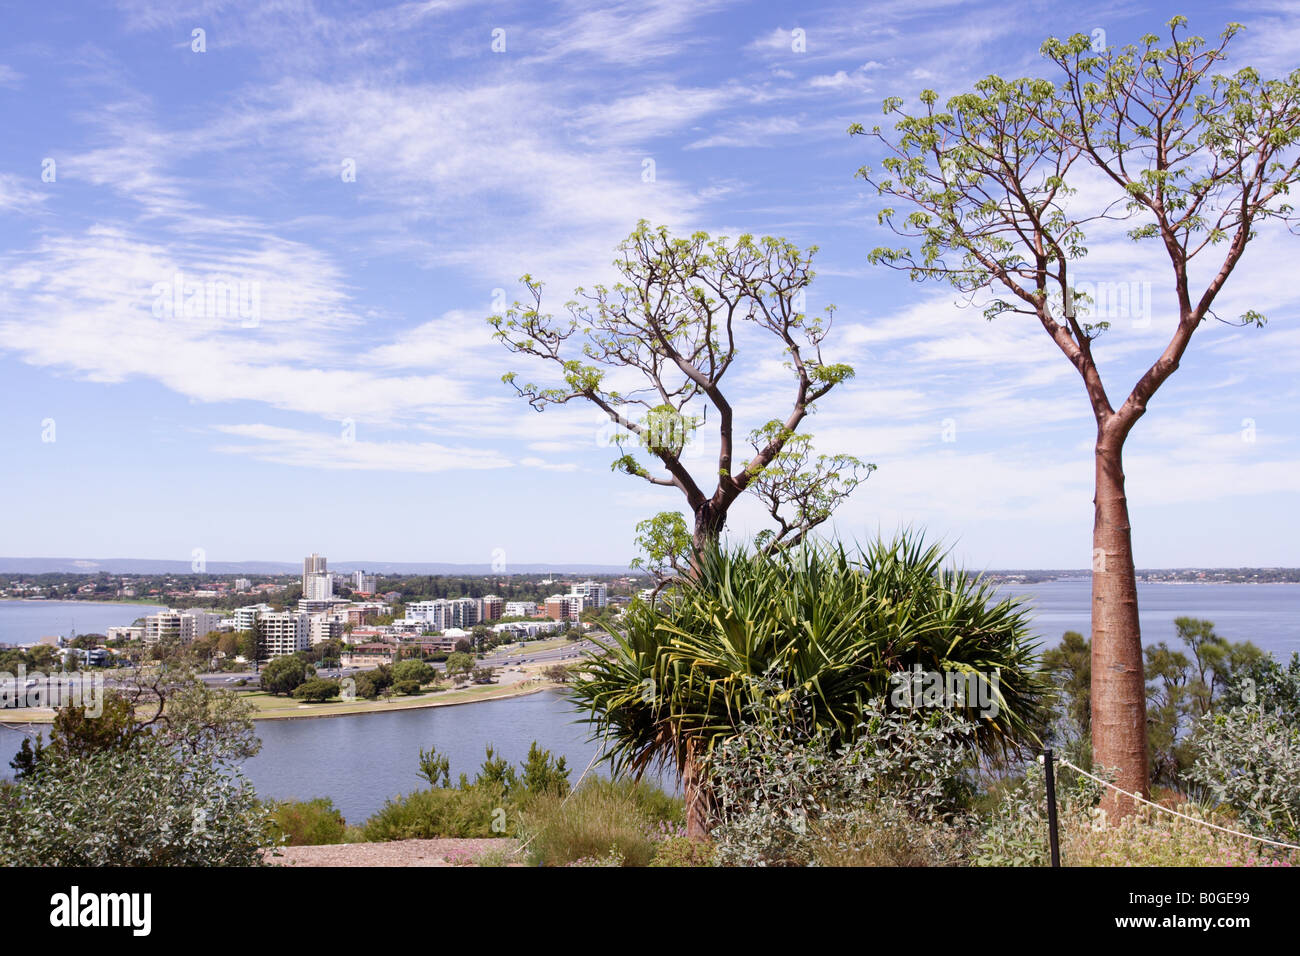 Boabs (Adansonia gregorii) tree at Kings Park in Perth, Western Australia. Stock Photo